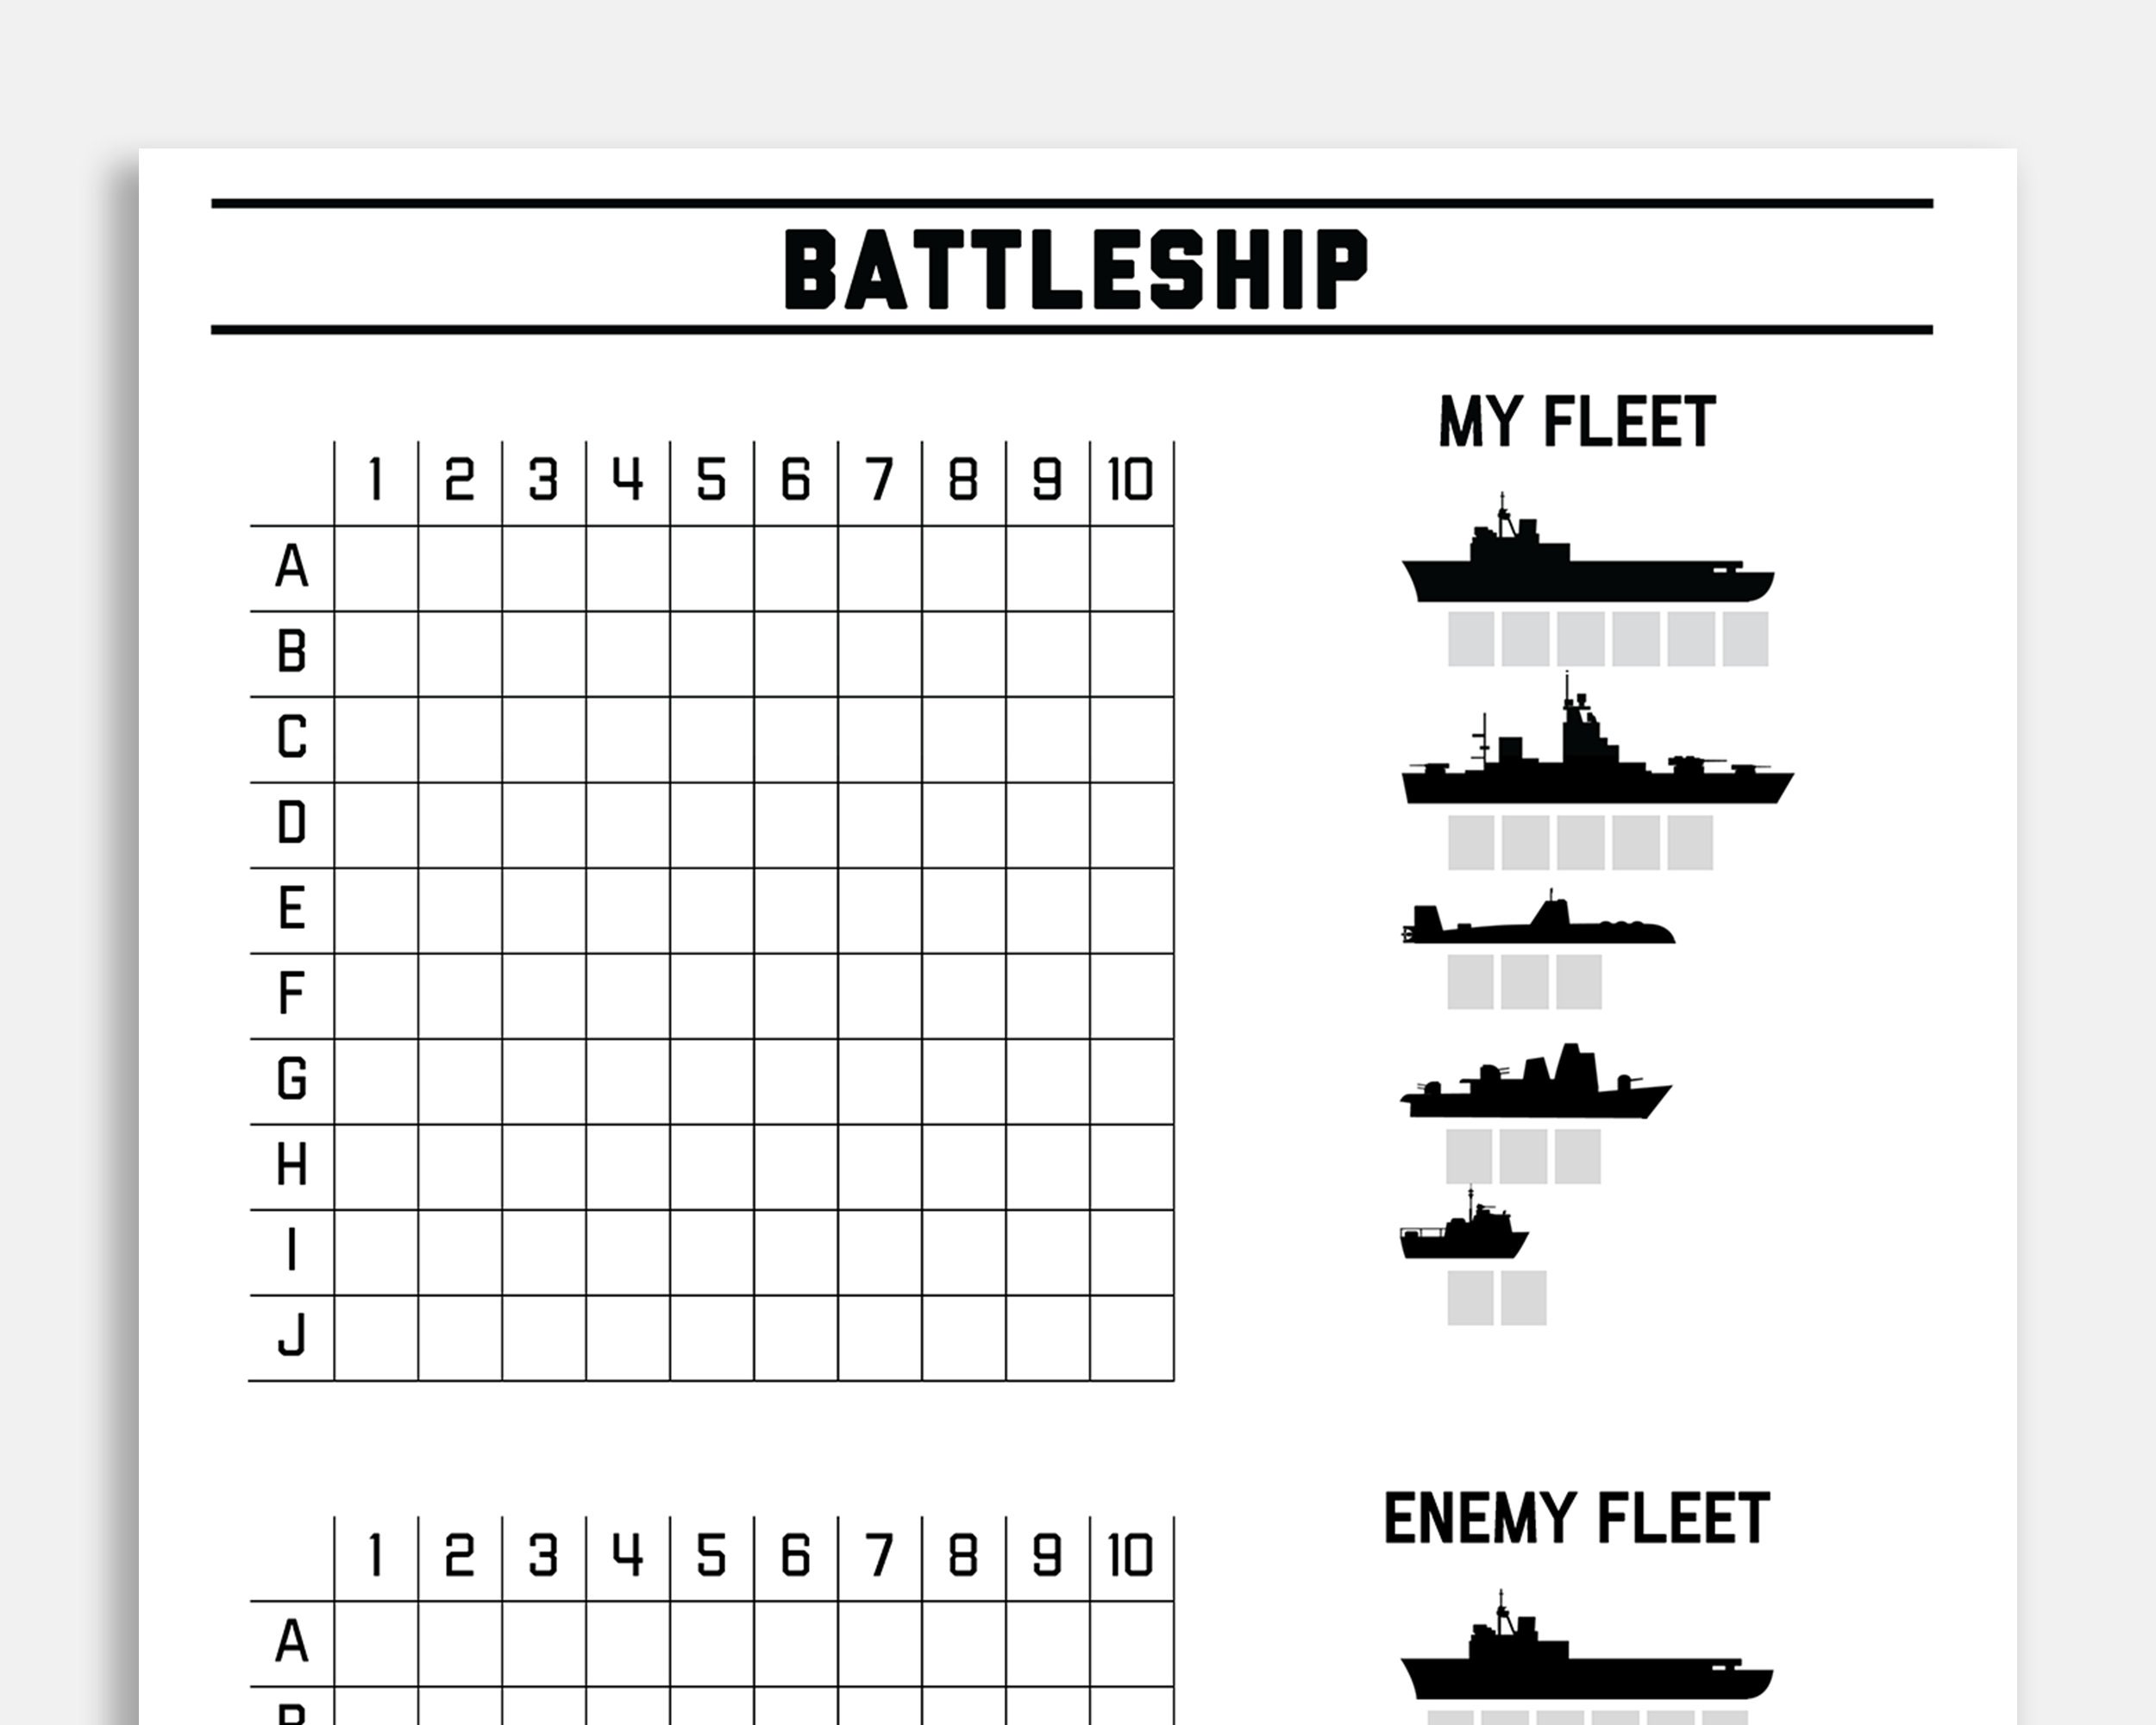 lego-battleship-for-sale-83-ads-for-used-lego-battleships